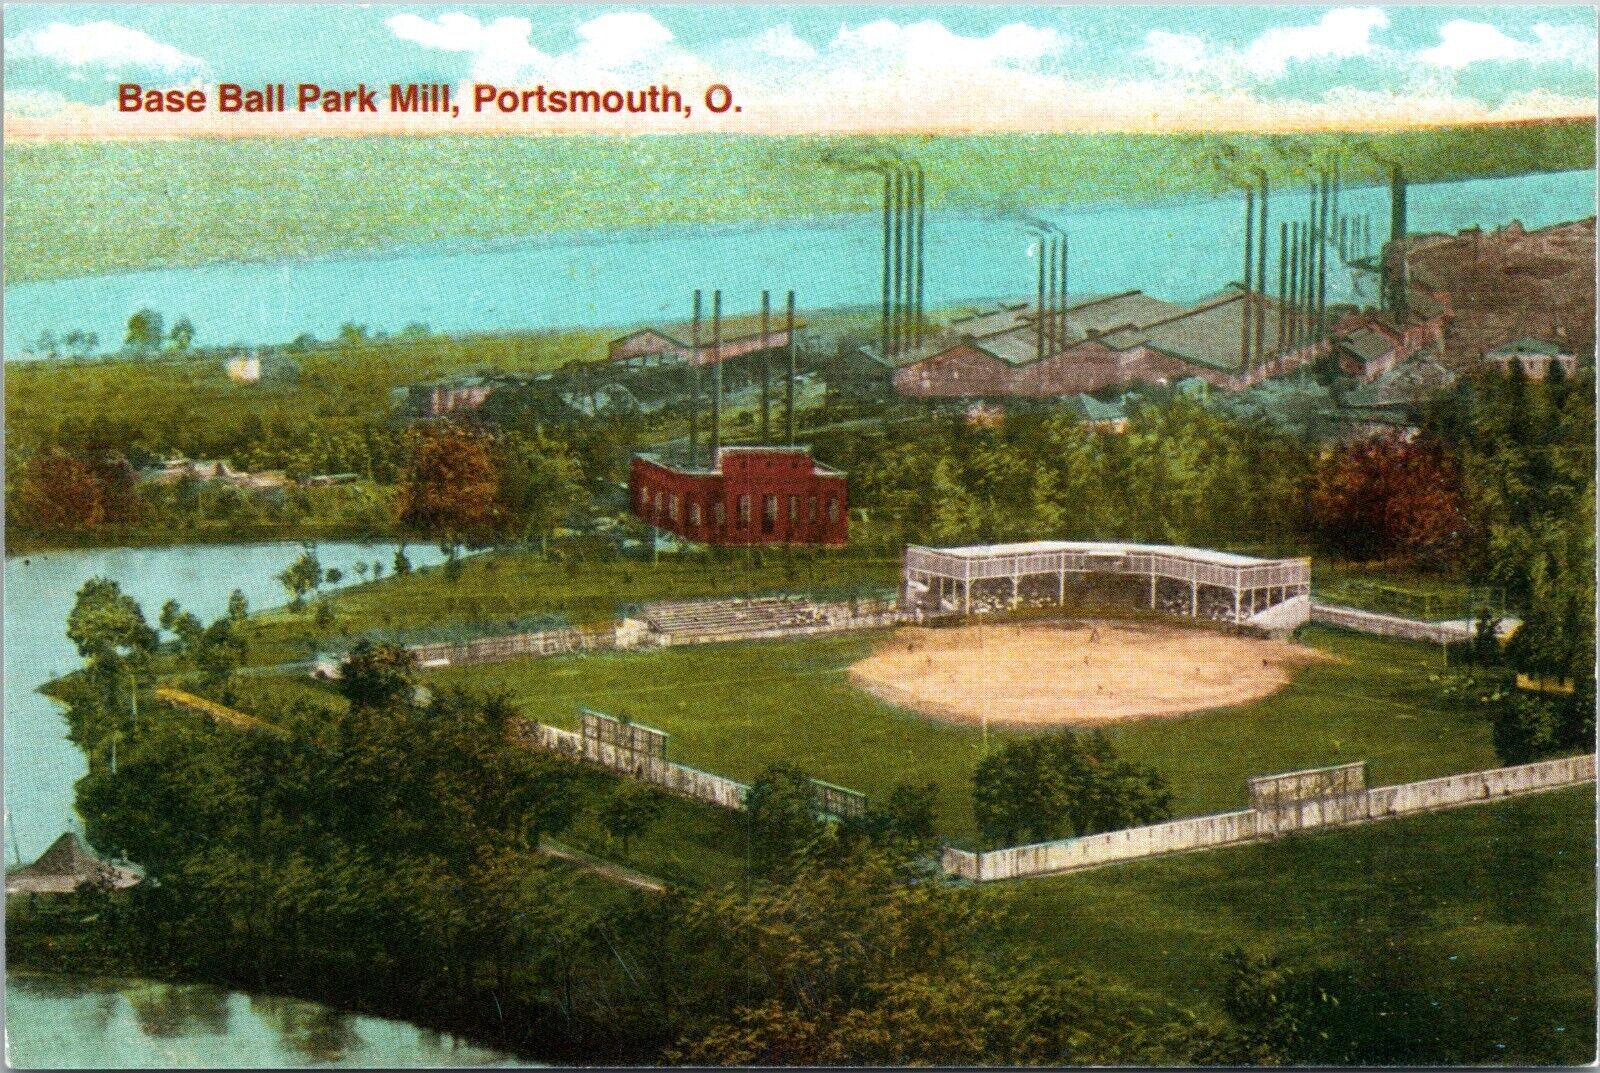 Millbrook Park, Portsmouth Ohio - Reprint 4x6 Postcard - Steel Mill, Baseball